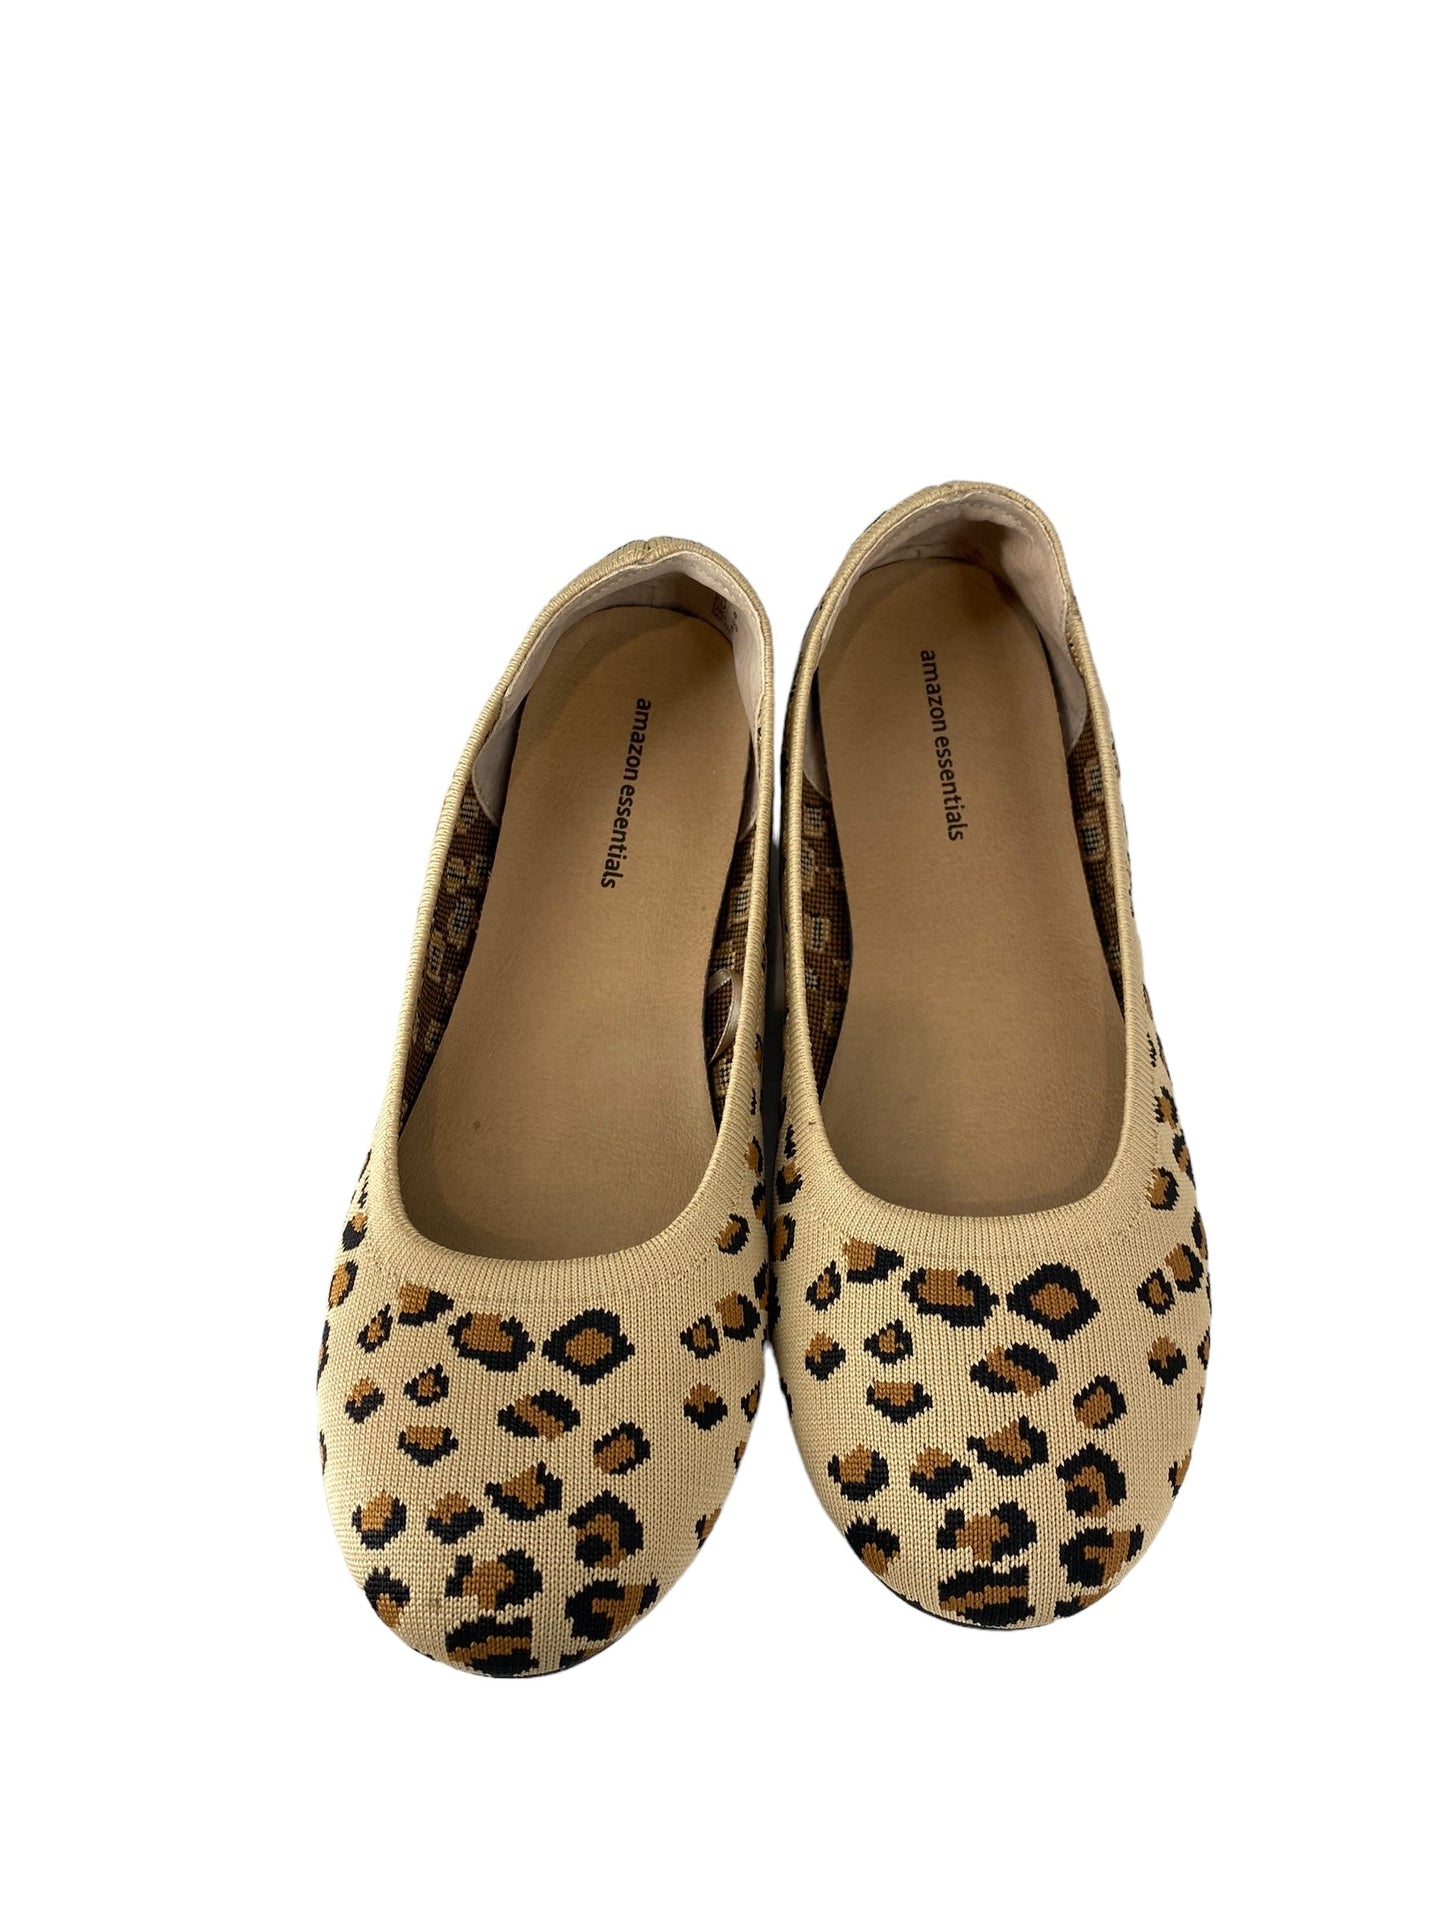 Animal Print Shoes Flats Amazon Essentials, Size 8